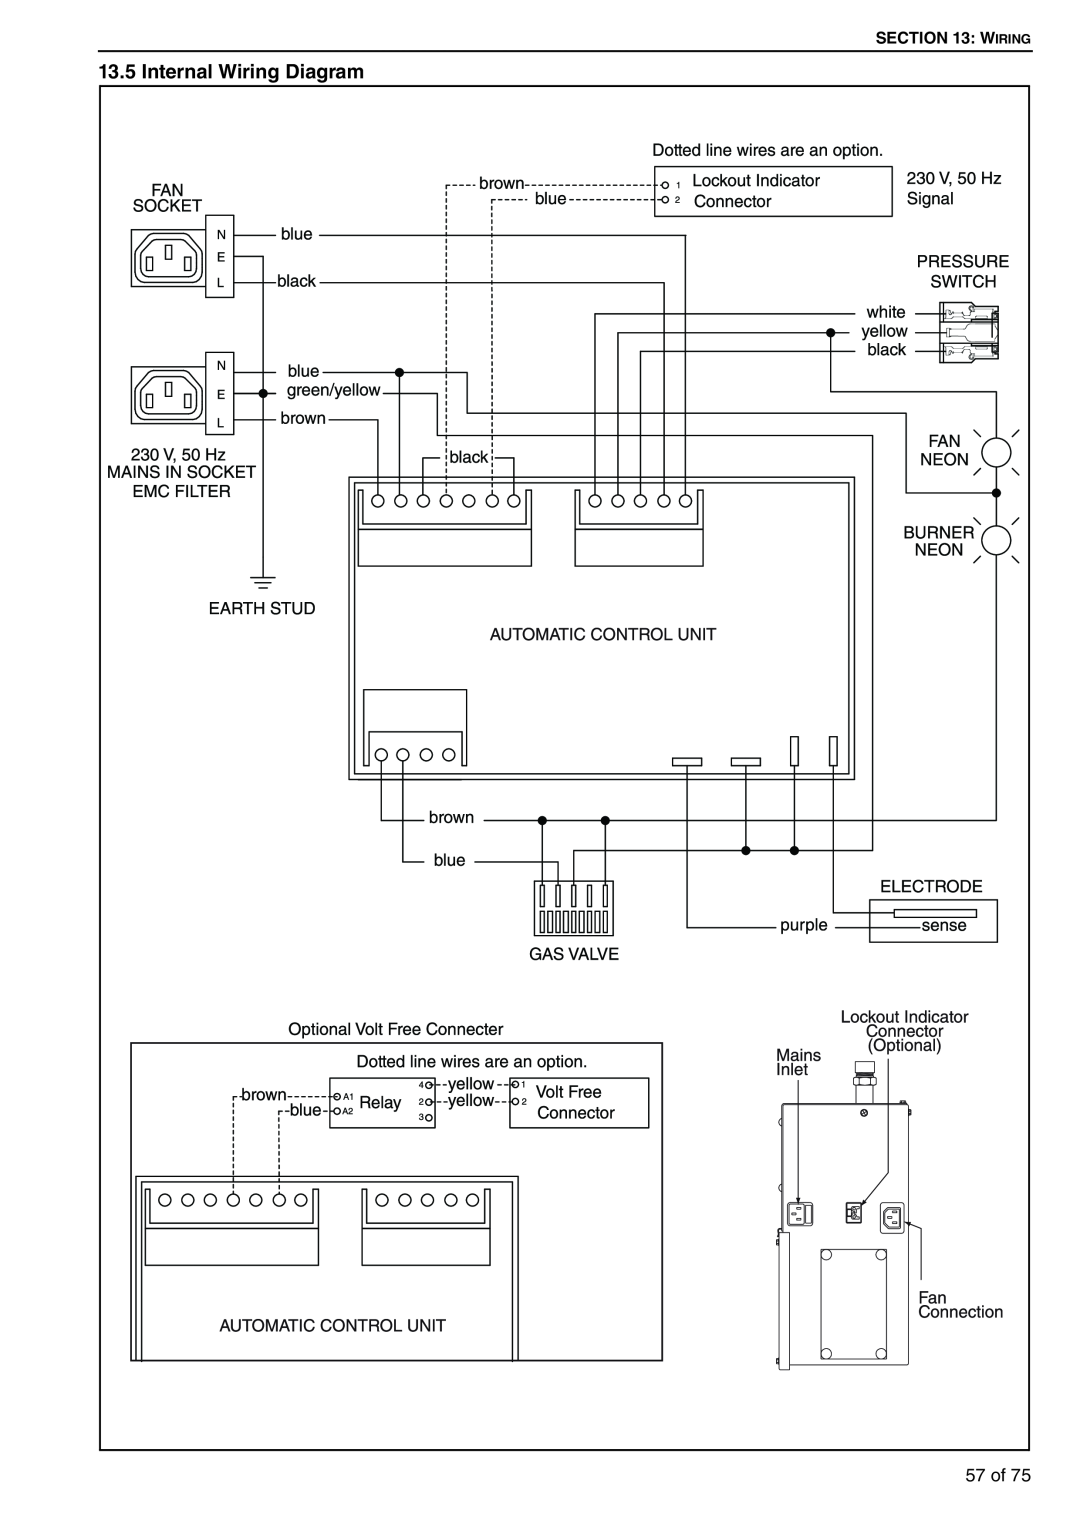 Roberts Gorden BH35ST/EF, BH35UT/EF, BH30UT/EF, BH40DL, BH60DL/EF, BH25UT/EF, BH15ST BH20ST Internal Wiring Diagram, 57 of 